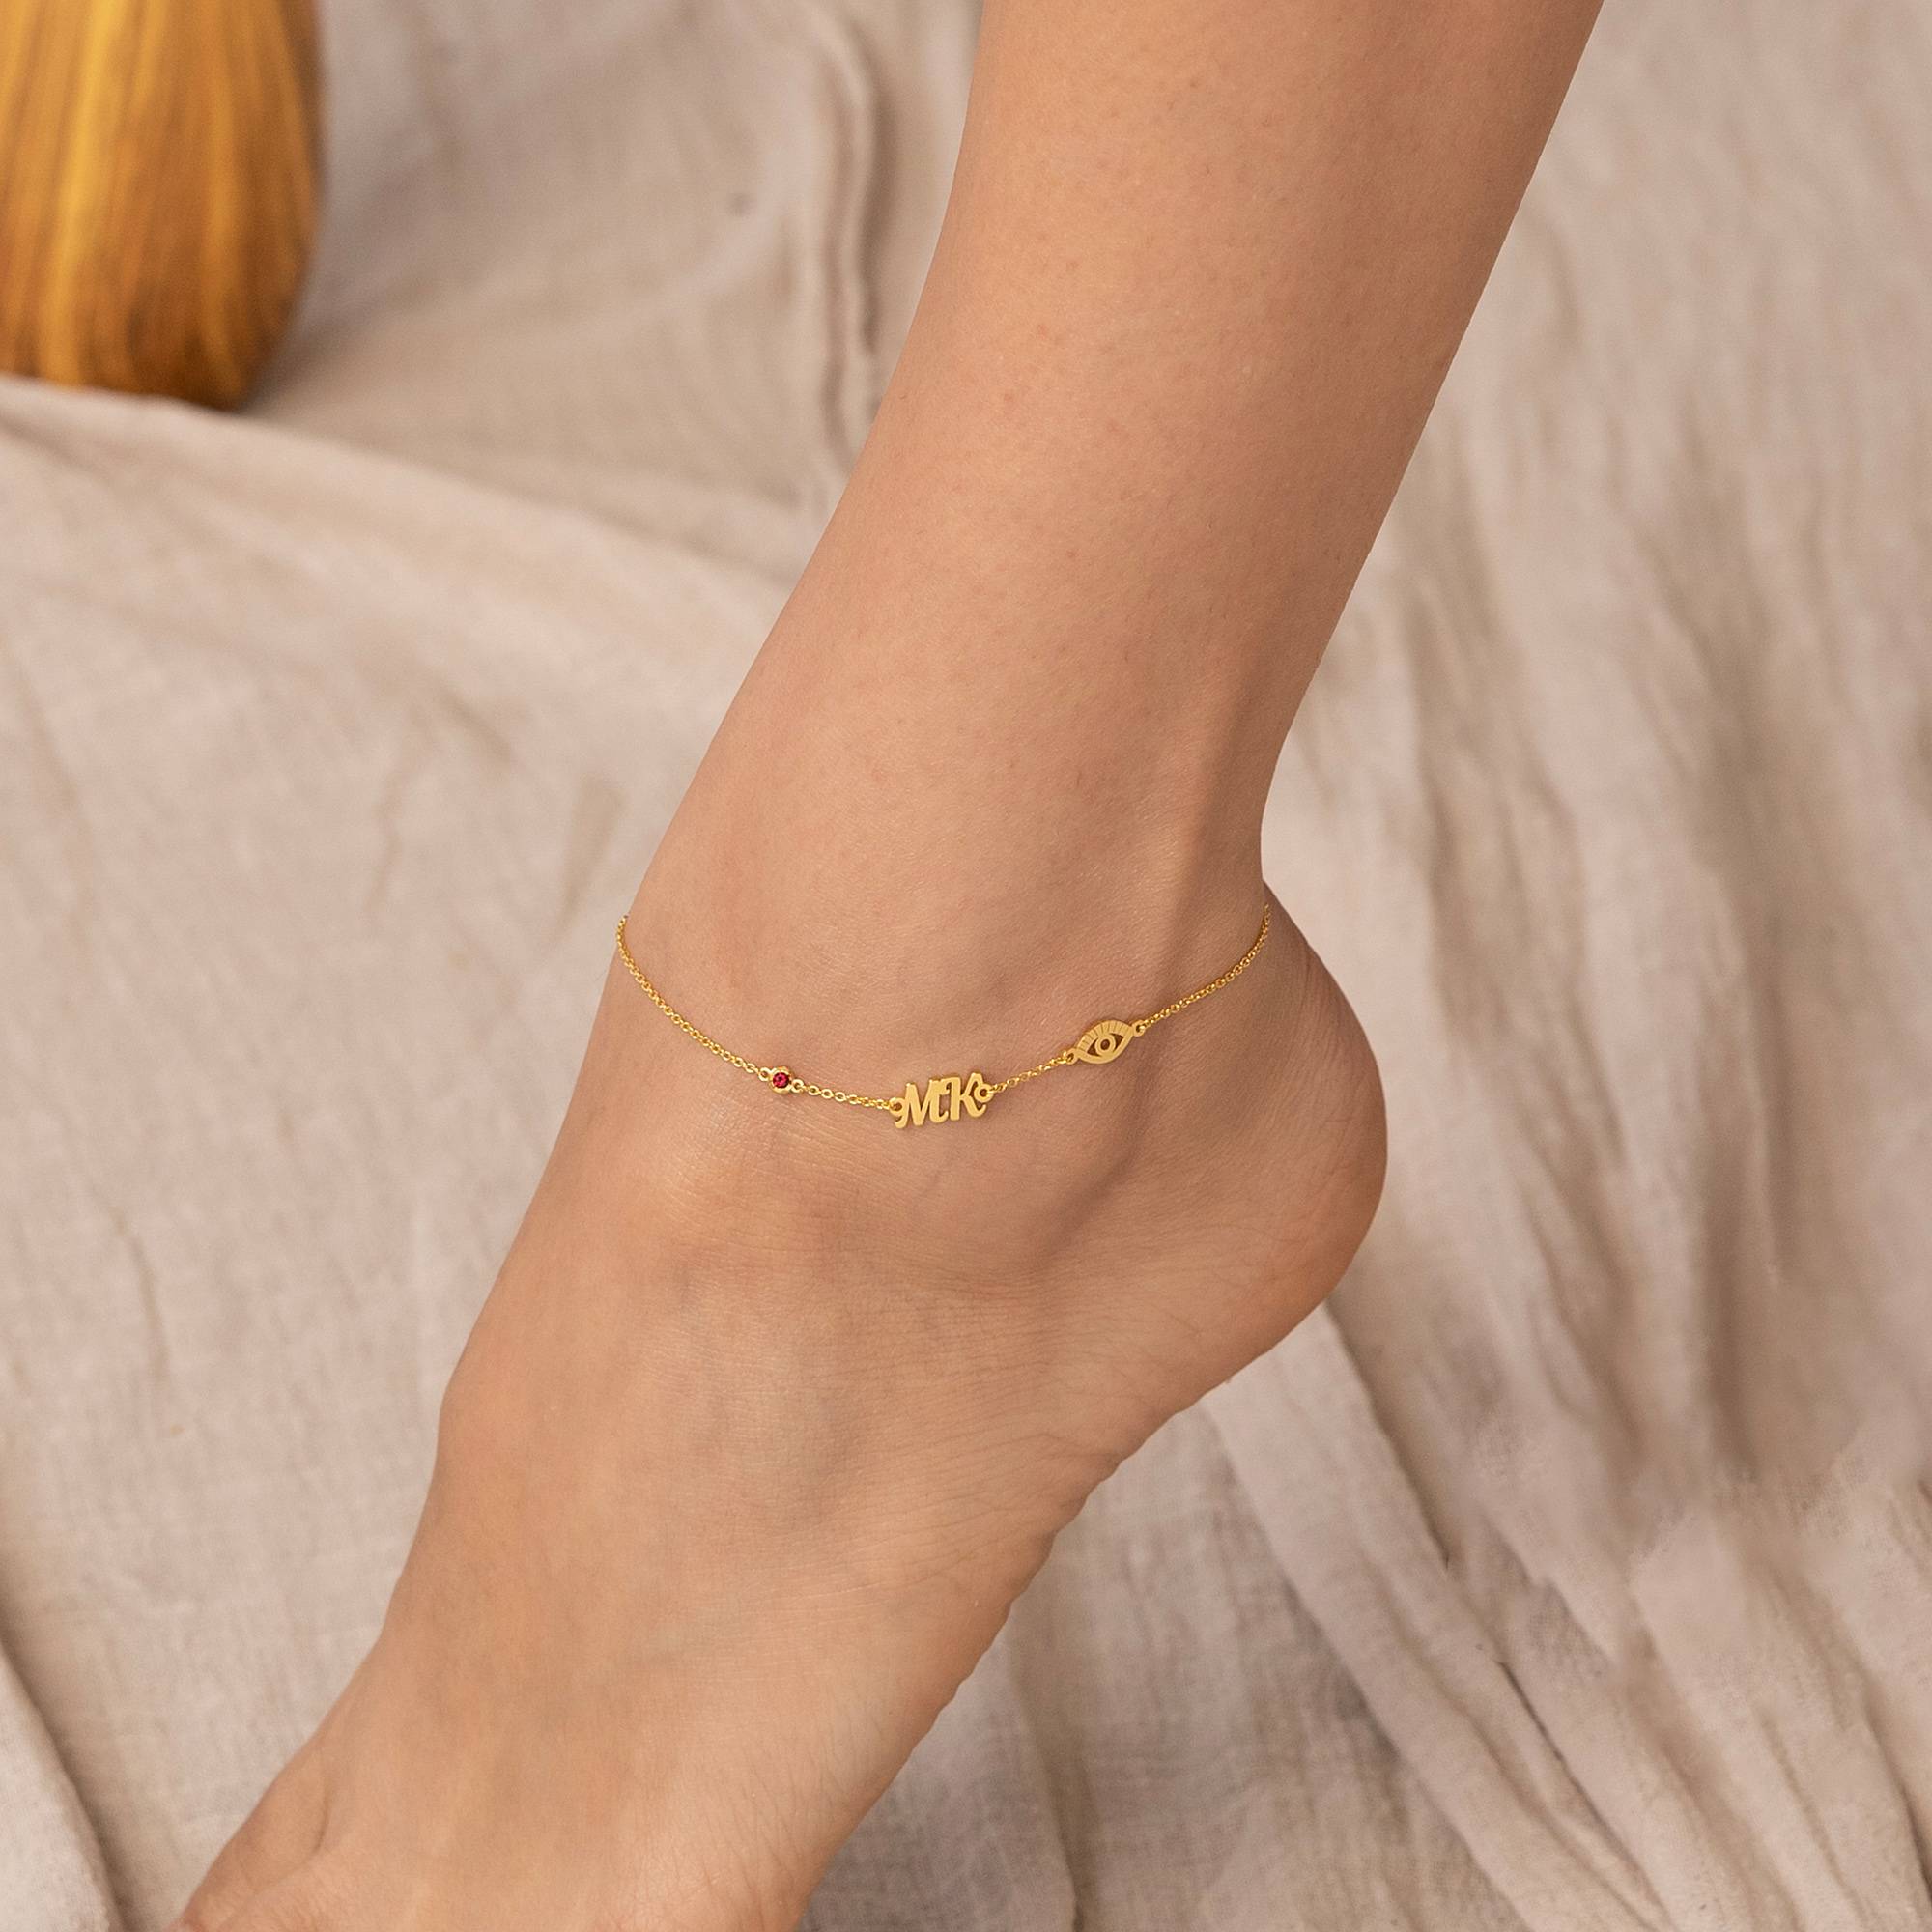 Bridget Evil Eye Initial Bracelet/Anklet with Gemstone in 18K Gold Vermeil-1 product photo